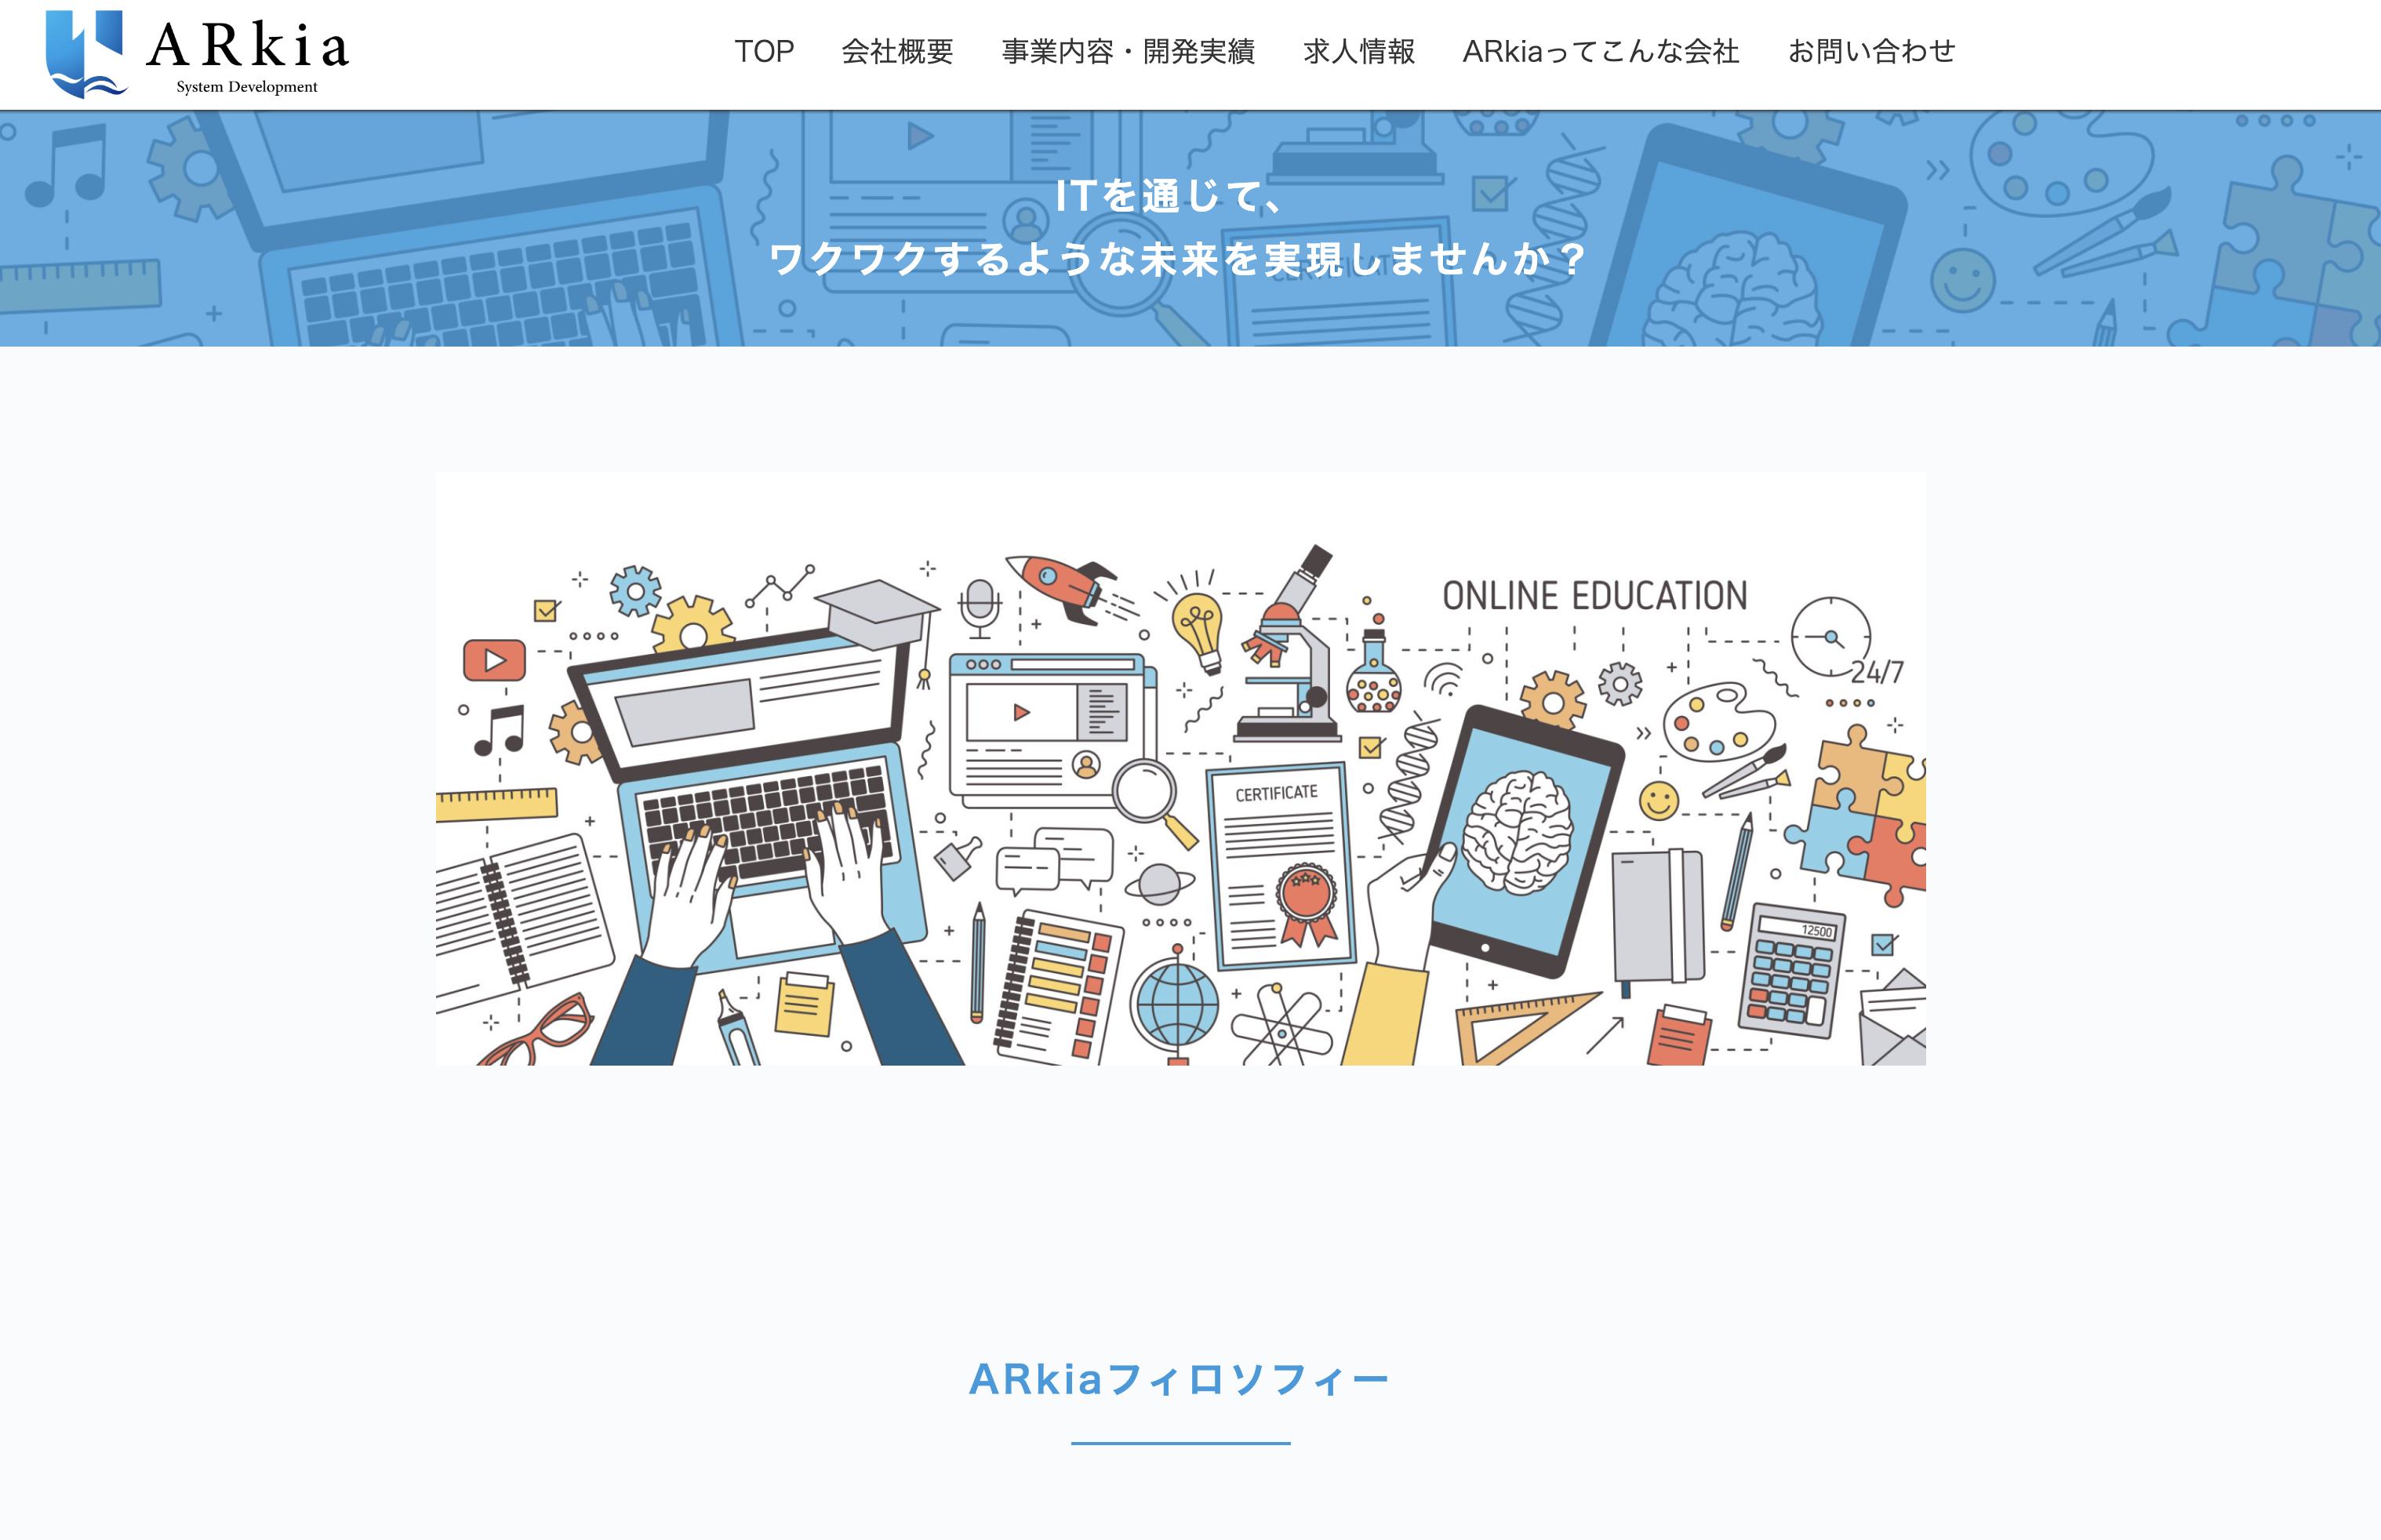 ARkia 株式会社のARkia 株式会社:情報システム代行サービス